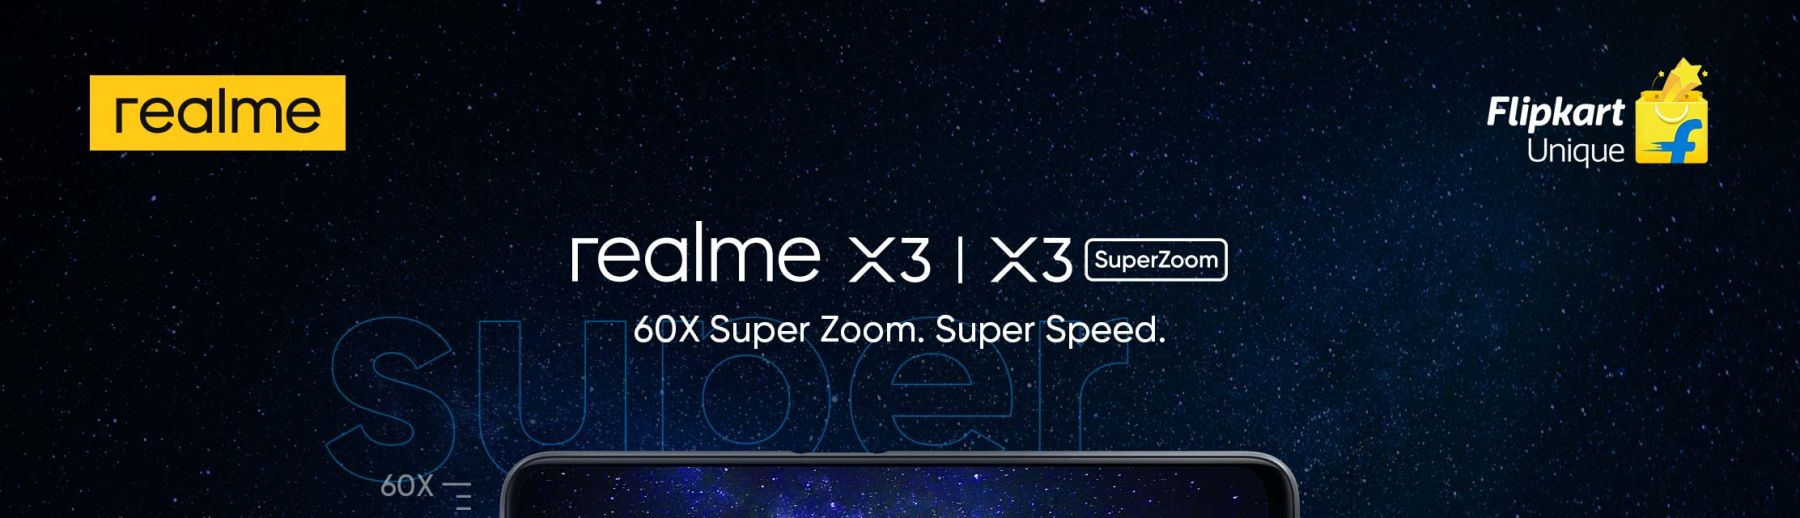 Realme X3 Series Ji99y6t4 Store Online - Buy Realme X3 Series Ji99y6t4 Online at Best Price in India